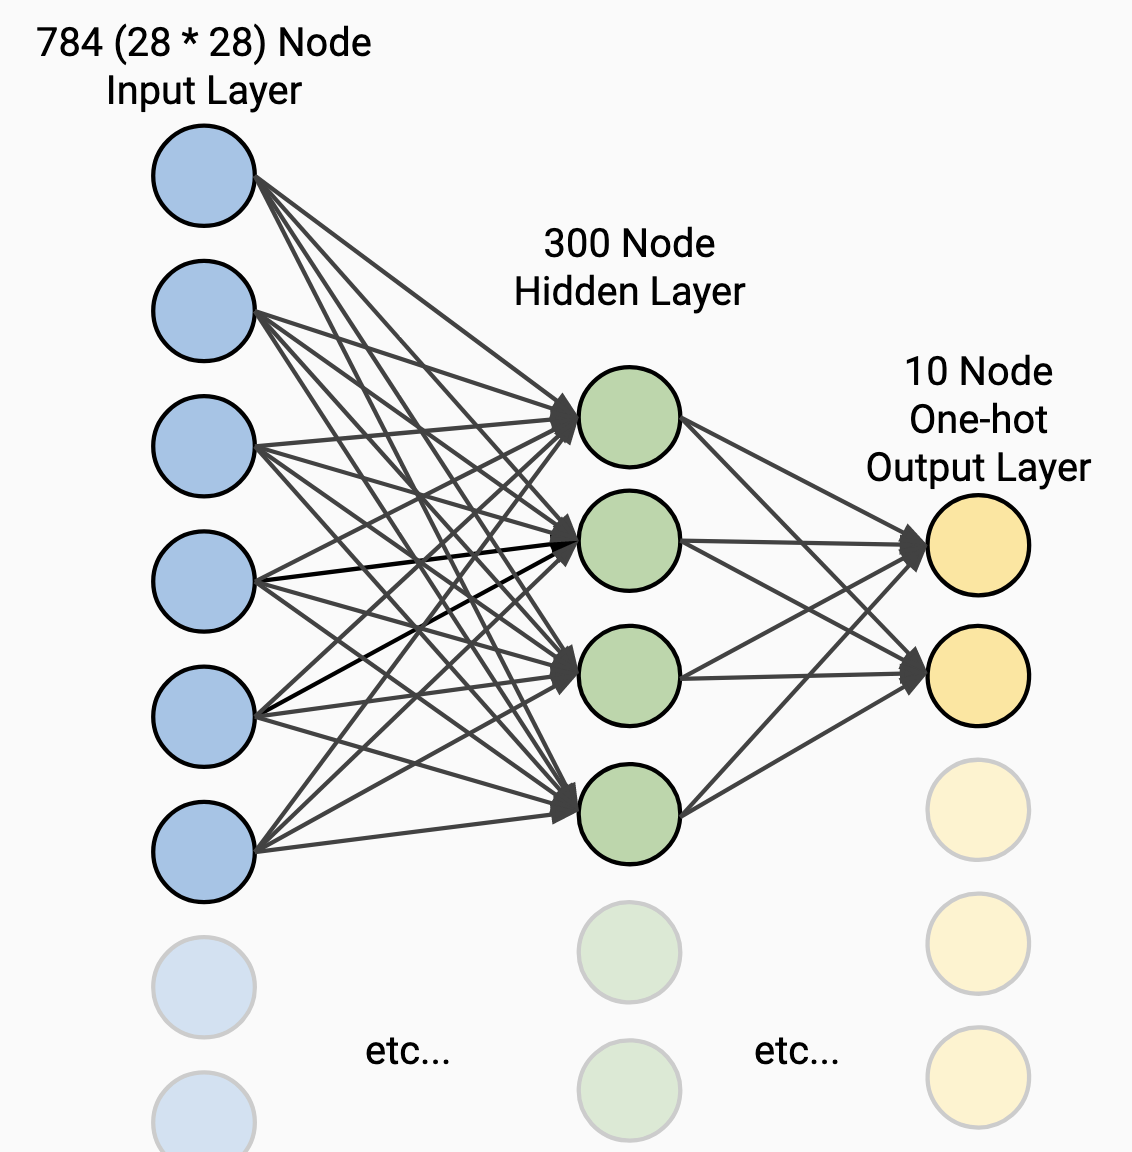 MNIST Network Architecture